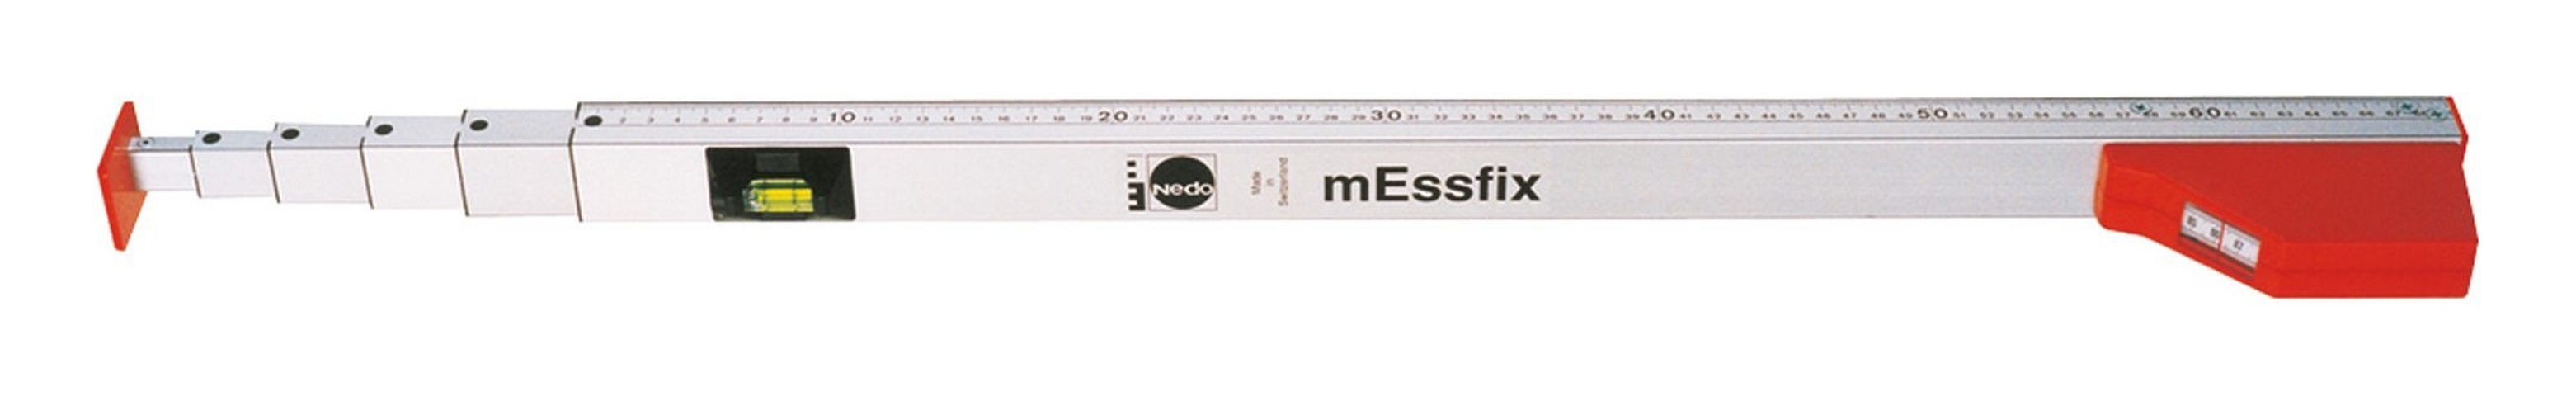 Nedo Winkelmesser, Teleskop-Messstab mEssfix 0,7-3